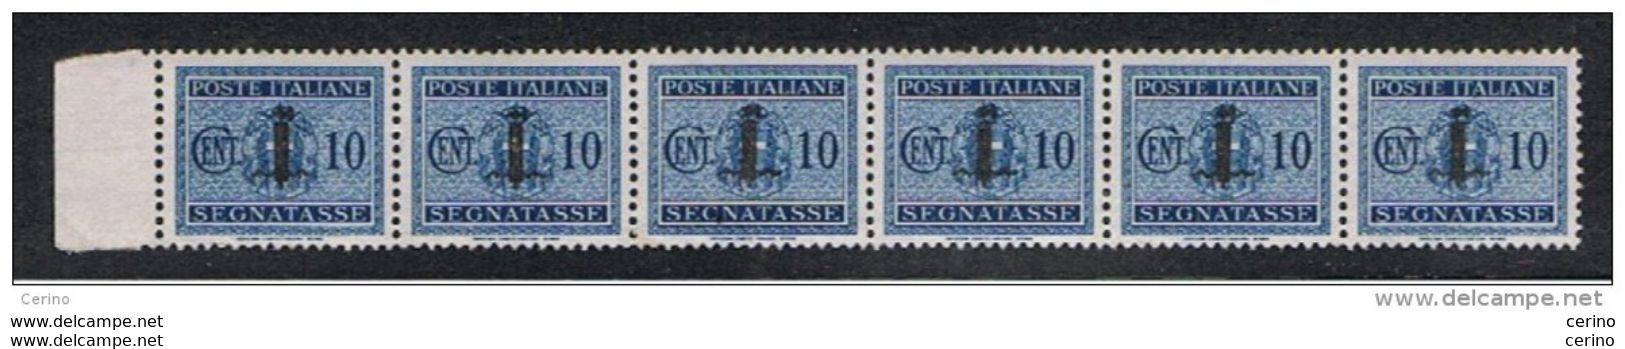 R.S.I.:  1944  TASSE  SOPRASTAMPATI  -  10 C. AZZURRO  STRISCIA  6  N. -  SASS. 61 - Impuestos